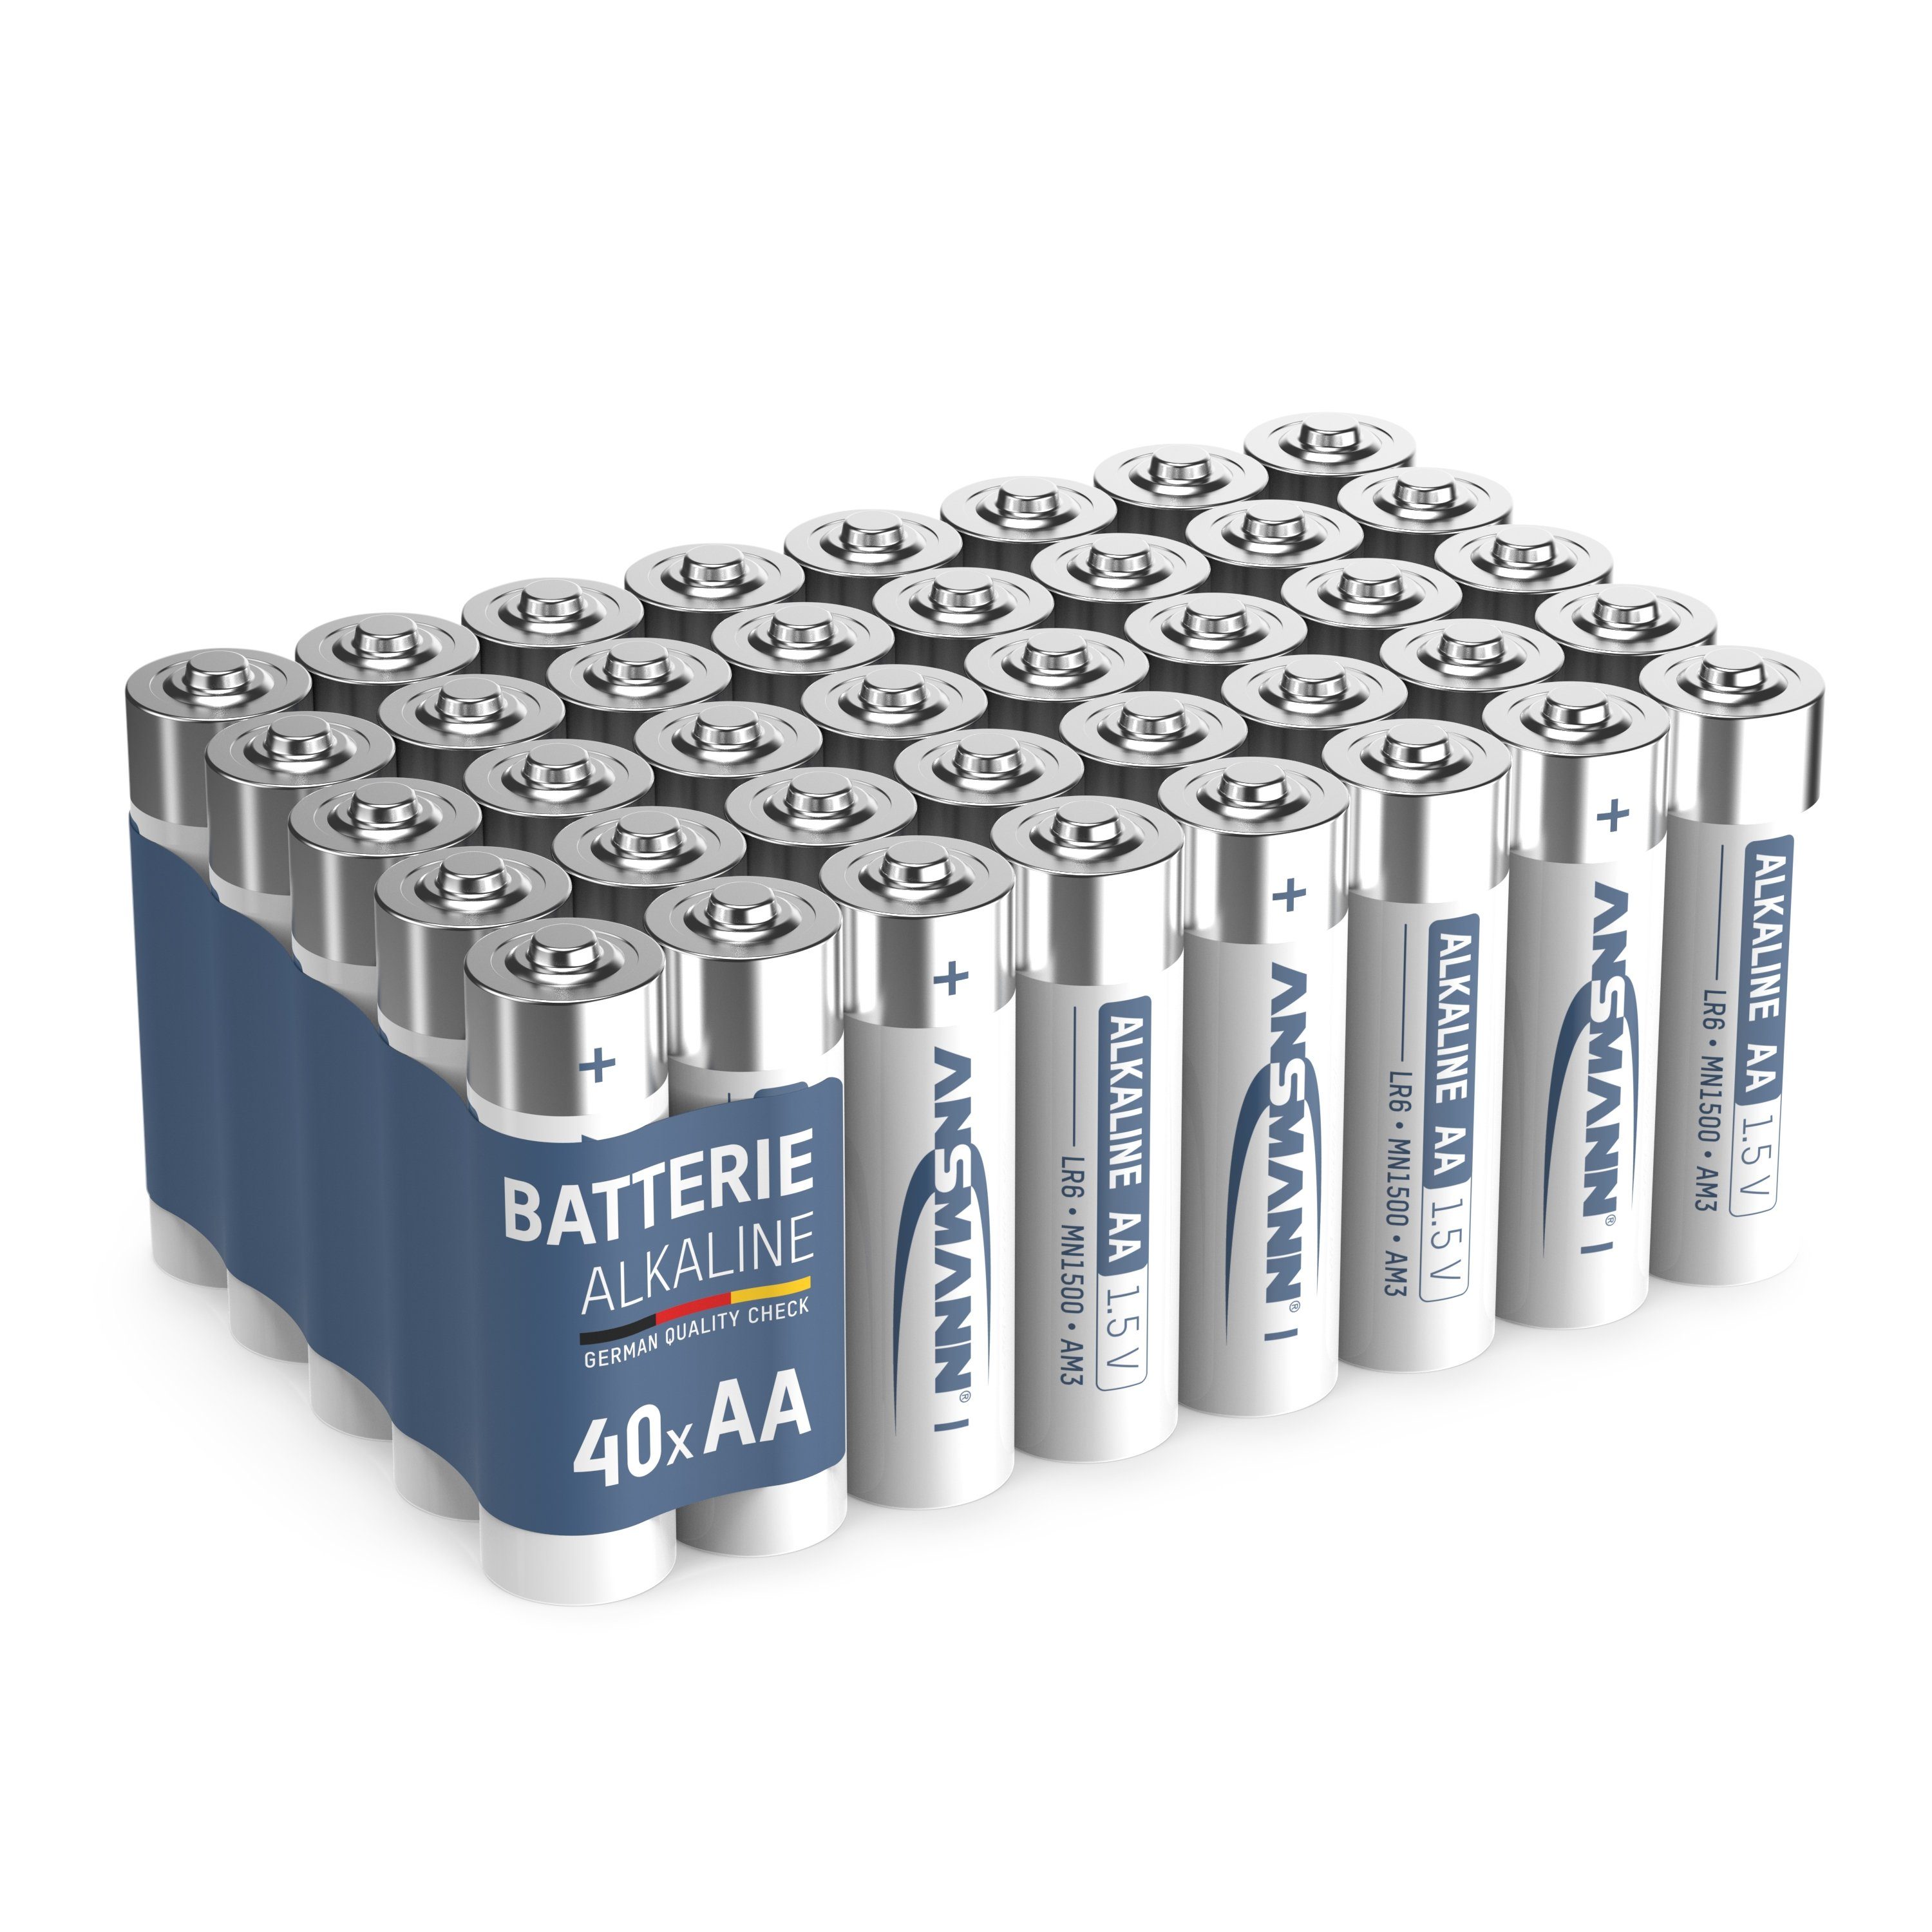 ANSMANN® Batterien AA 40 Stück, Alkaline Mignon Batterie, für Lichterkette uvm. Batterie